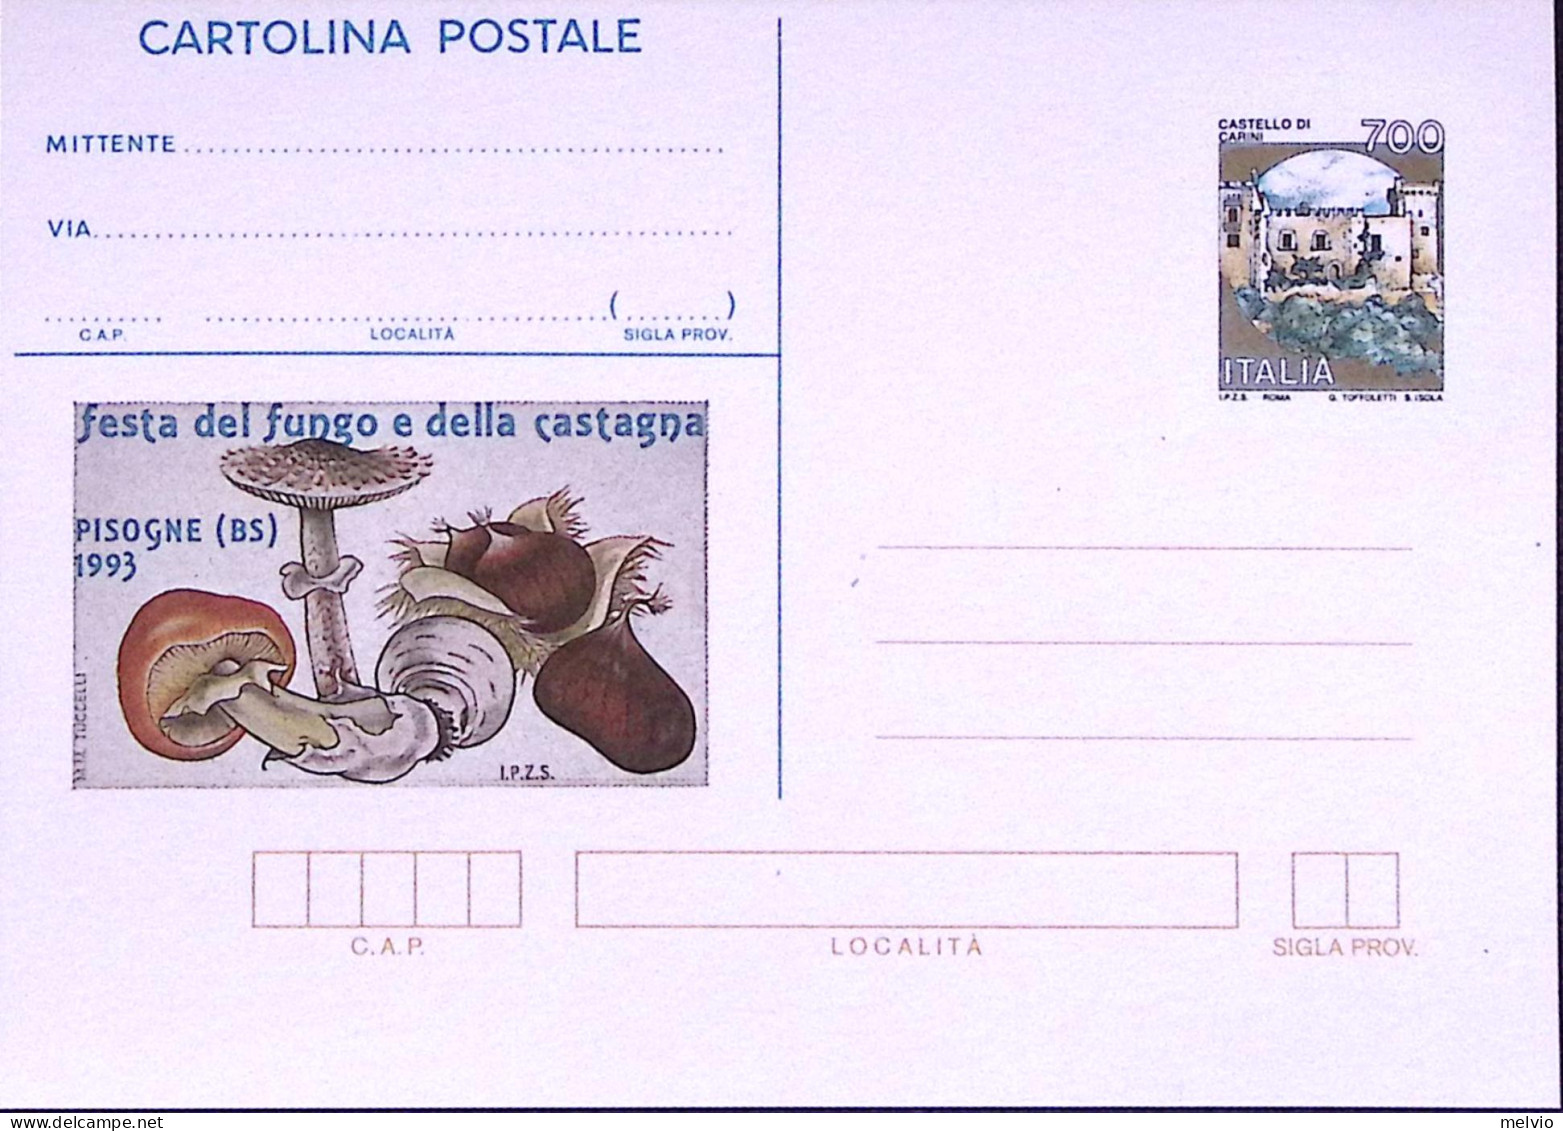 1993-PISOGNE Funghi E Castagne Cartolina Postale Castelli Lire 700, Soprastampat - Entiers Postaux